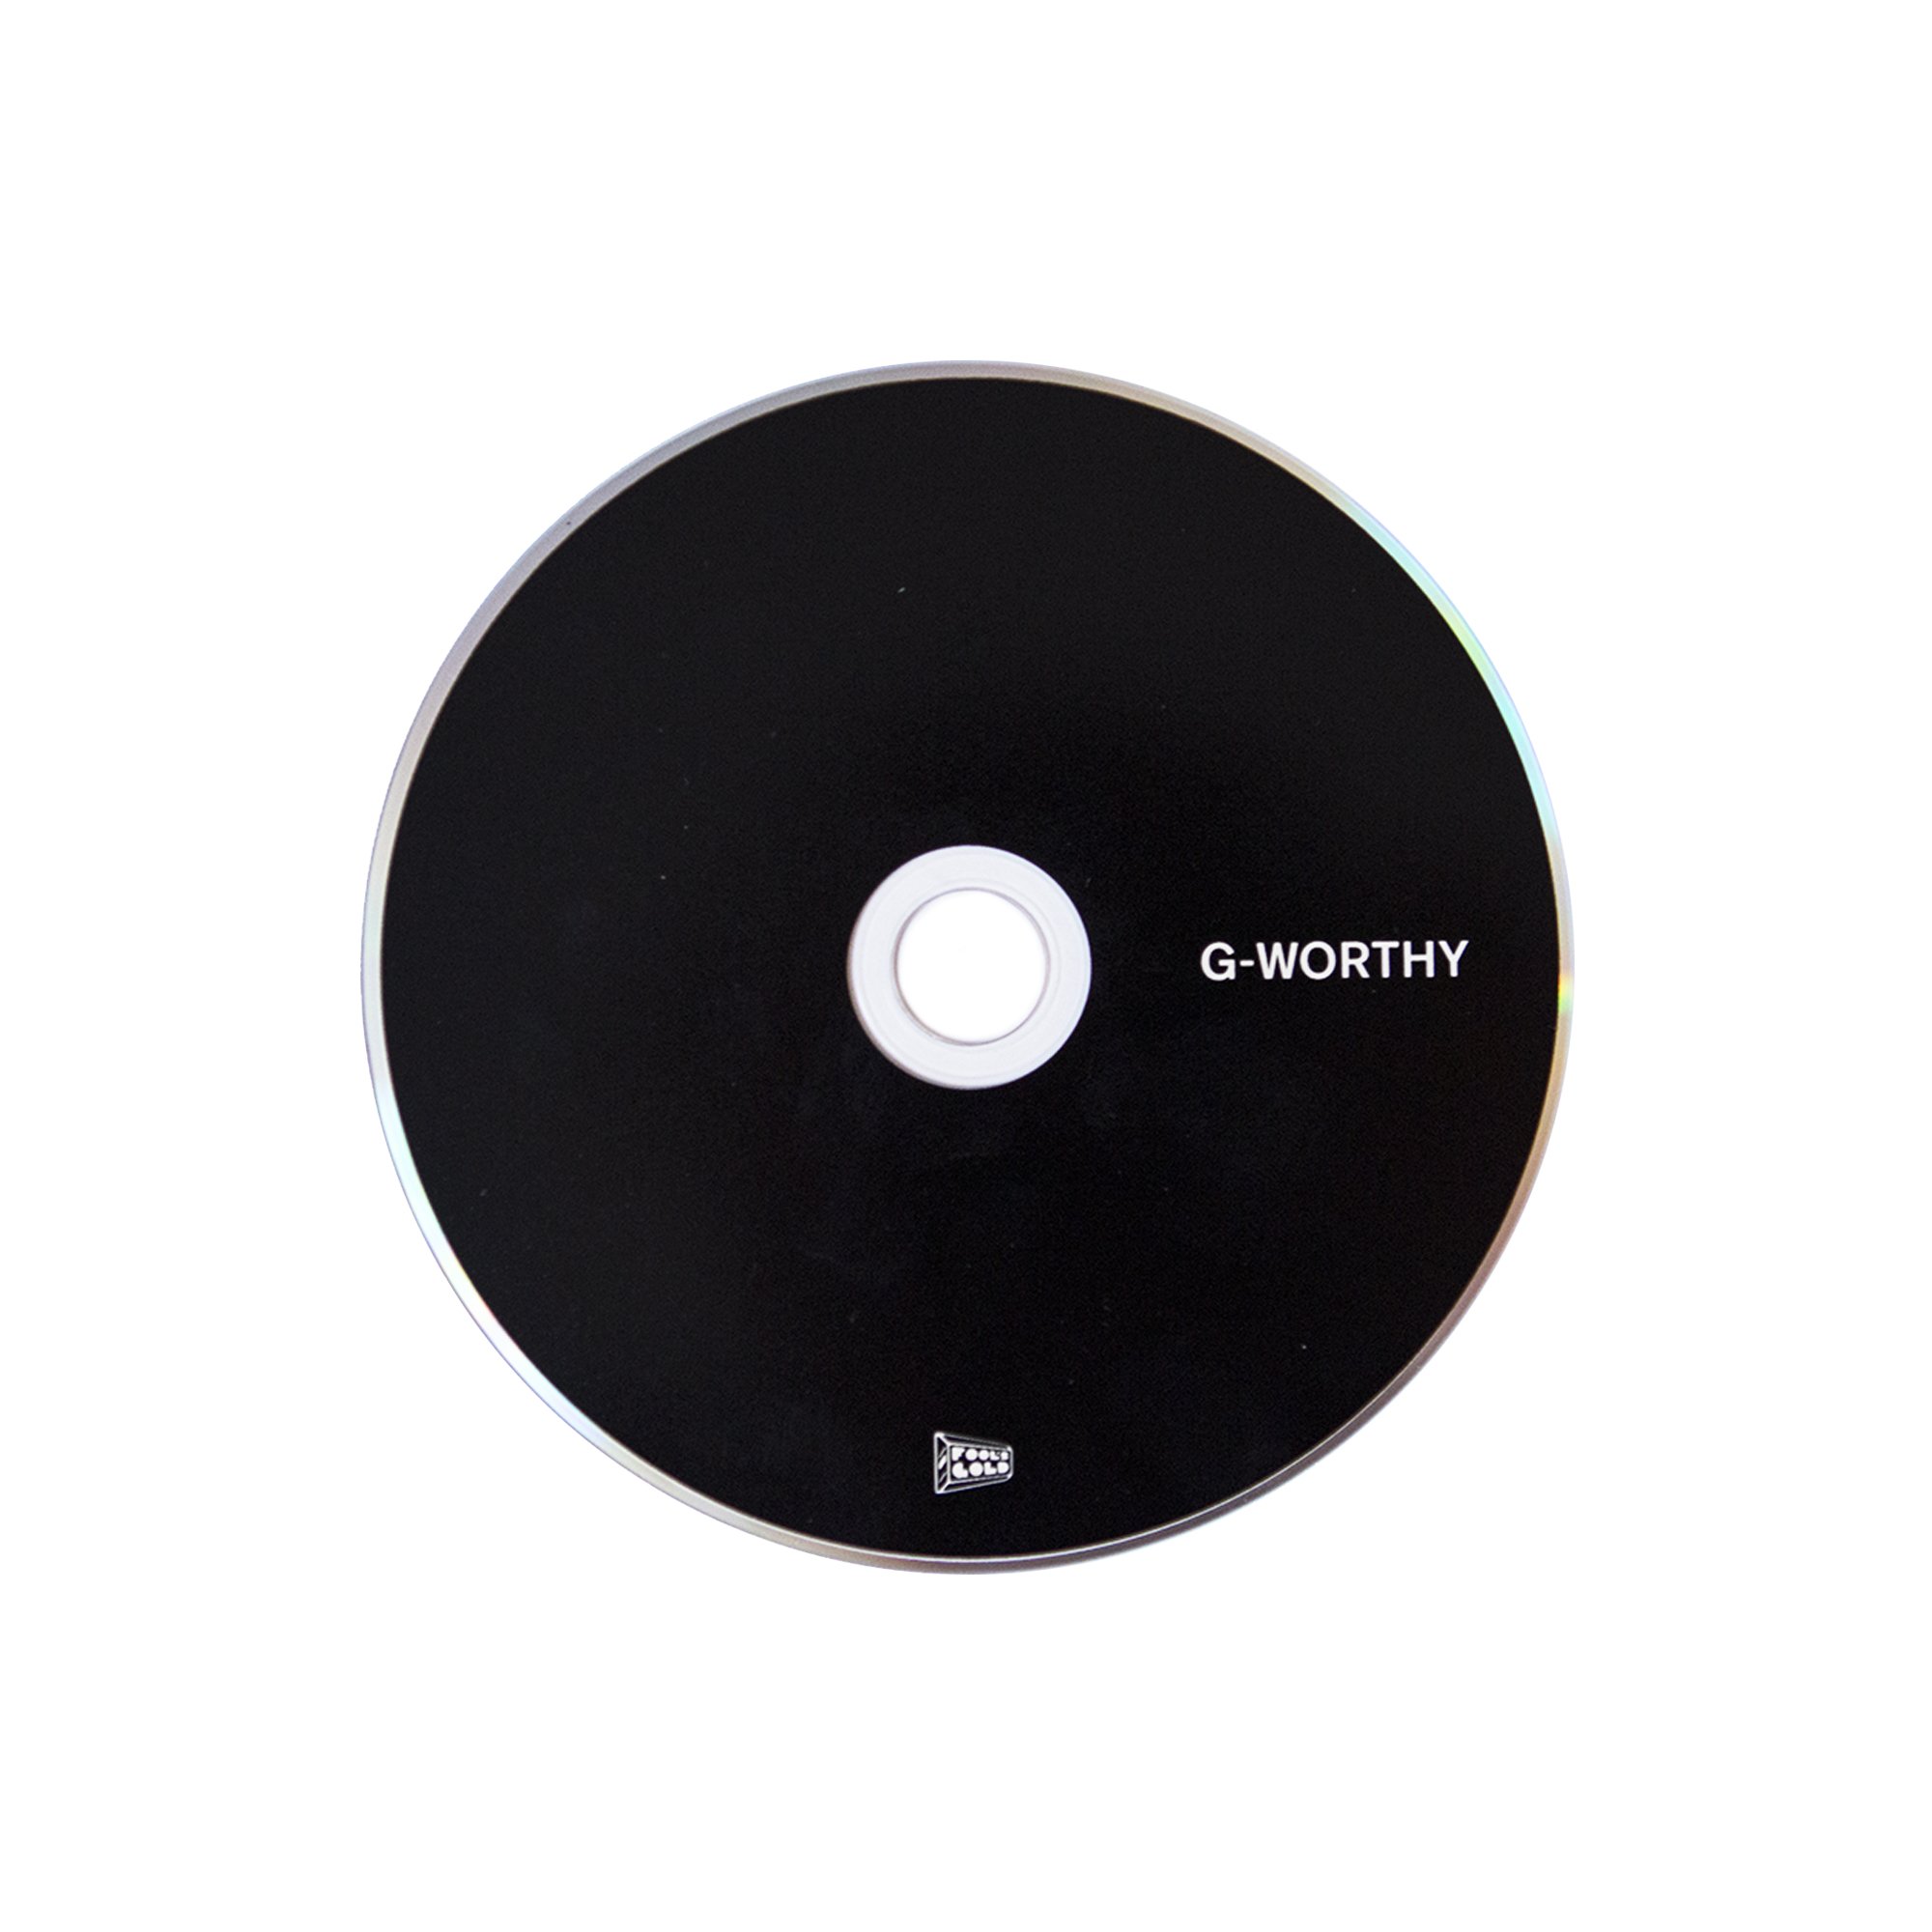 G-Worthy “G-Worthy” CD | Fool's Gold Records